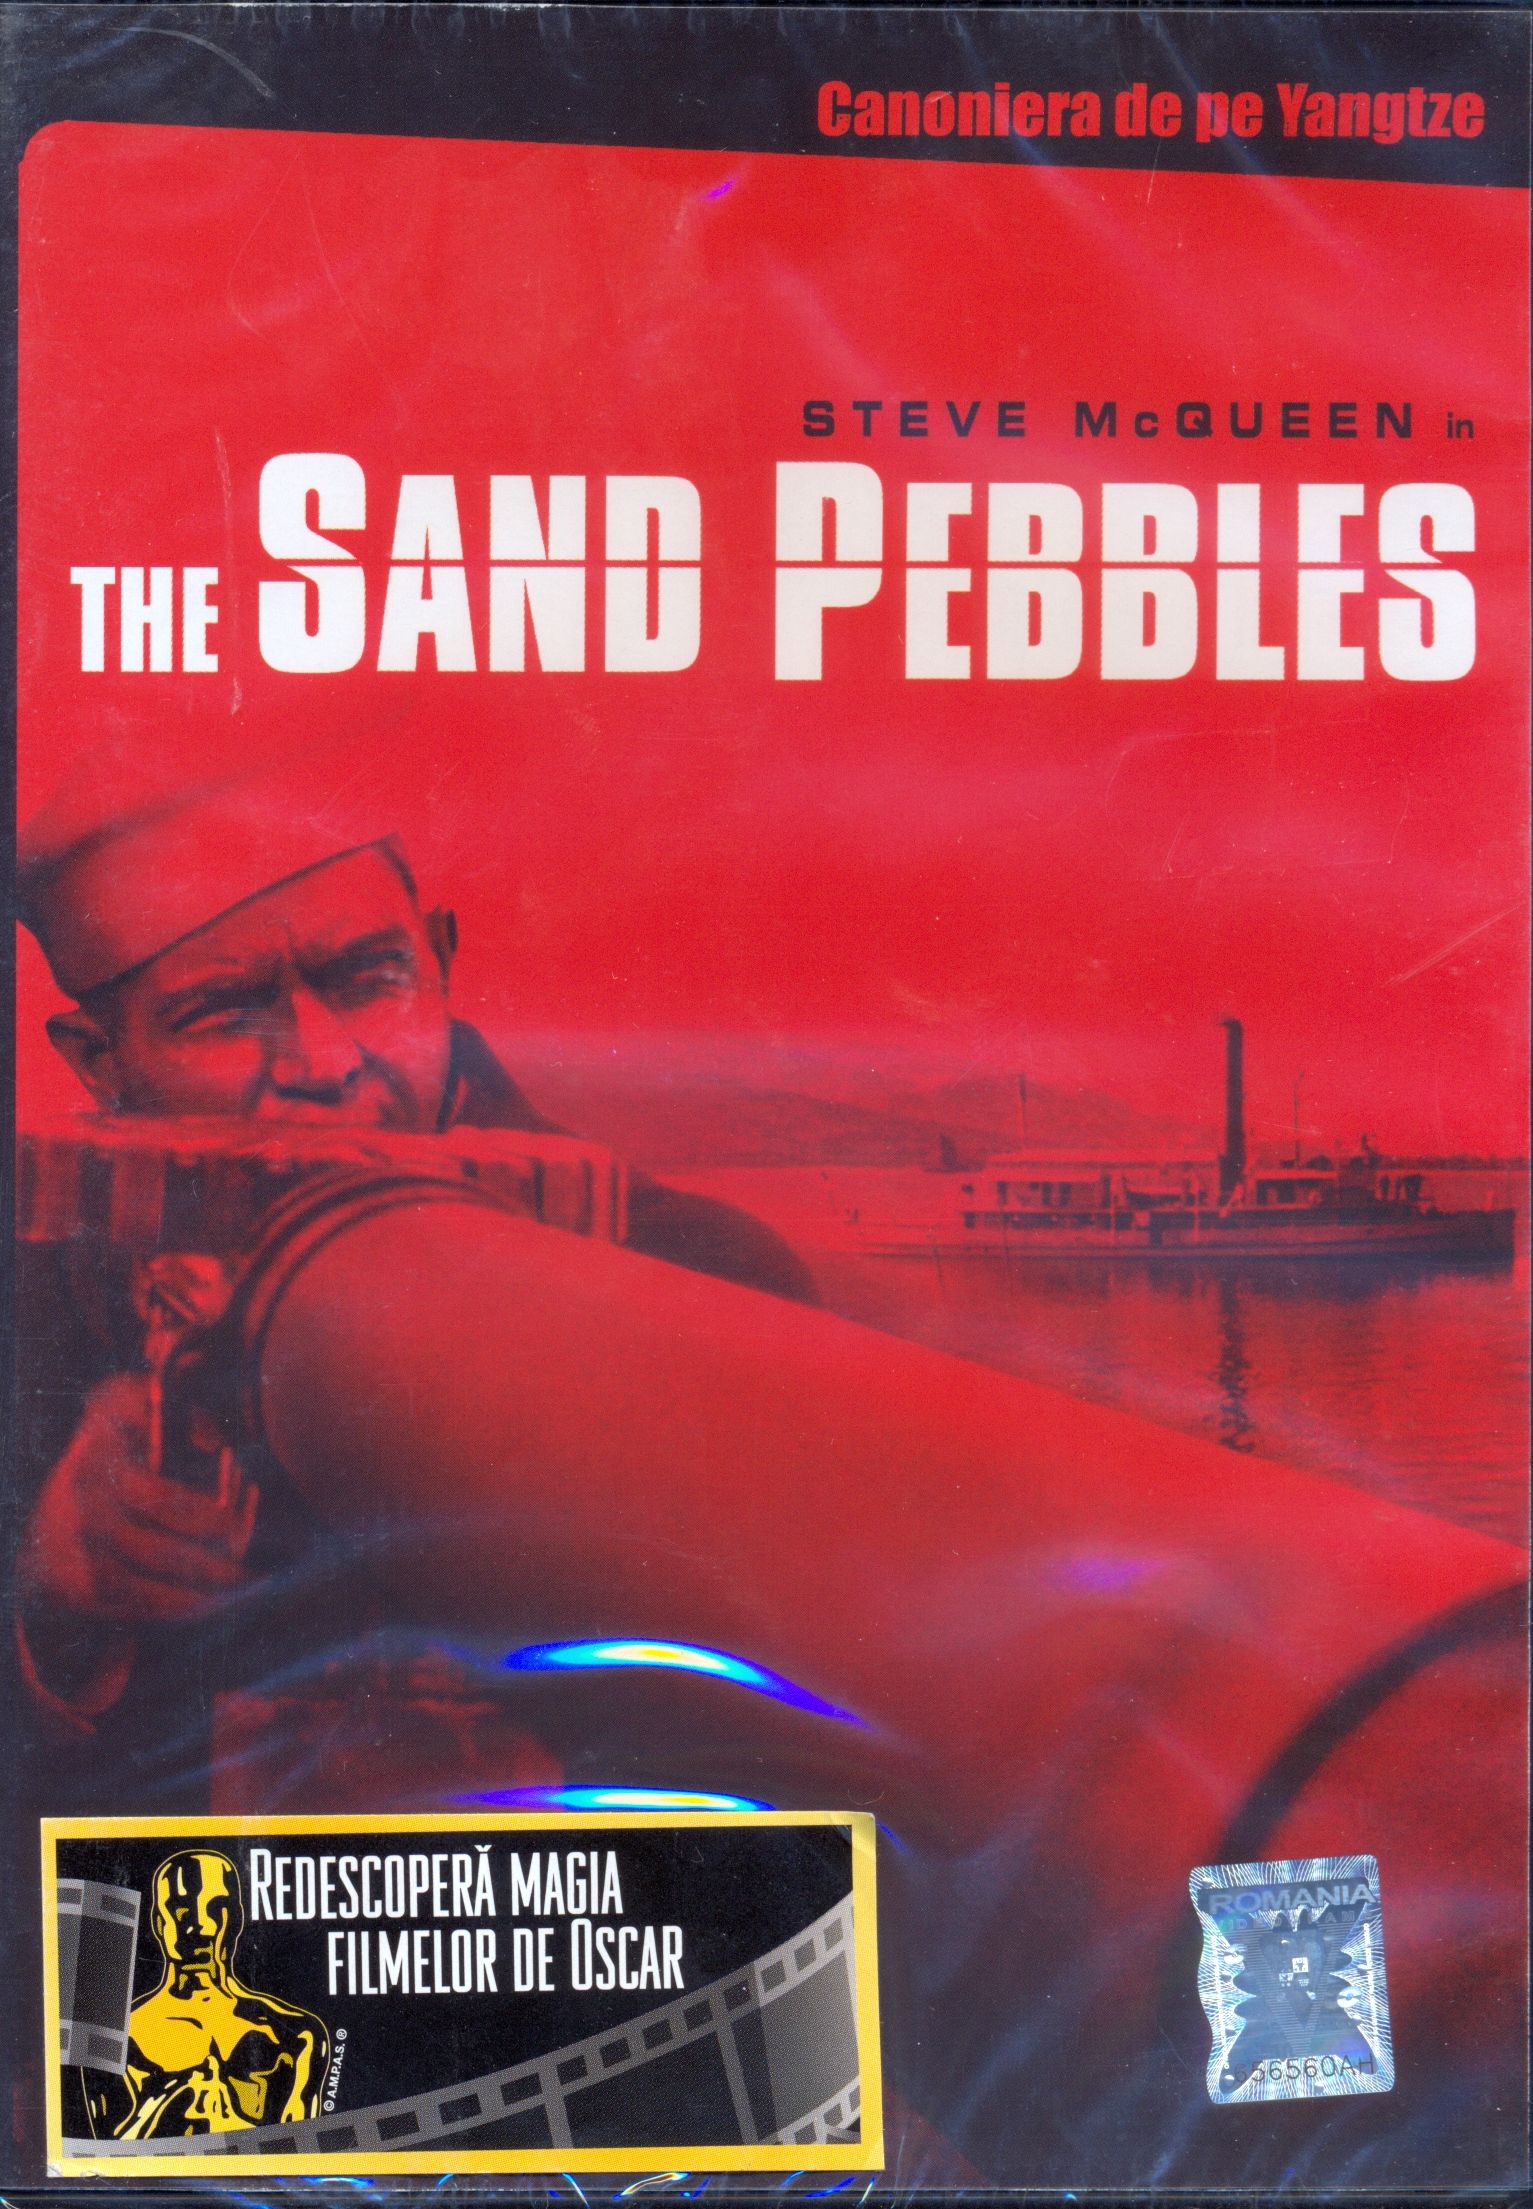 Canoniera de pe Yangtze / The Sand Pebbles | Robert Wise